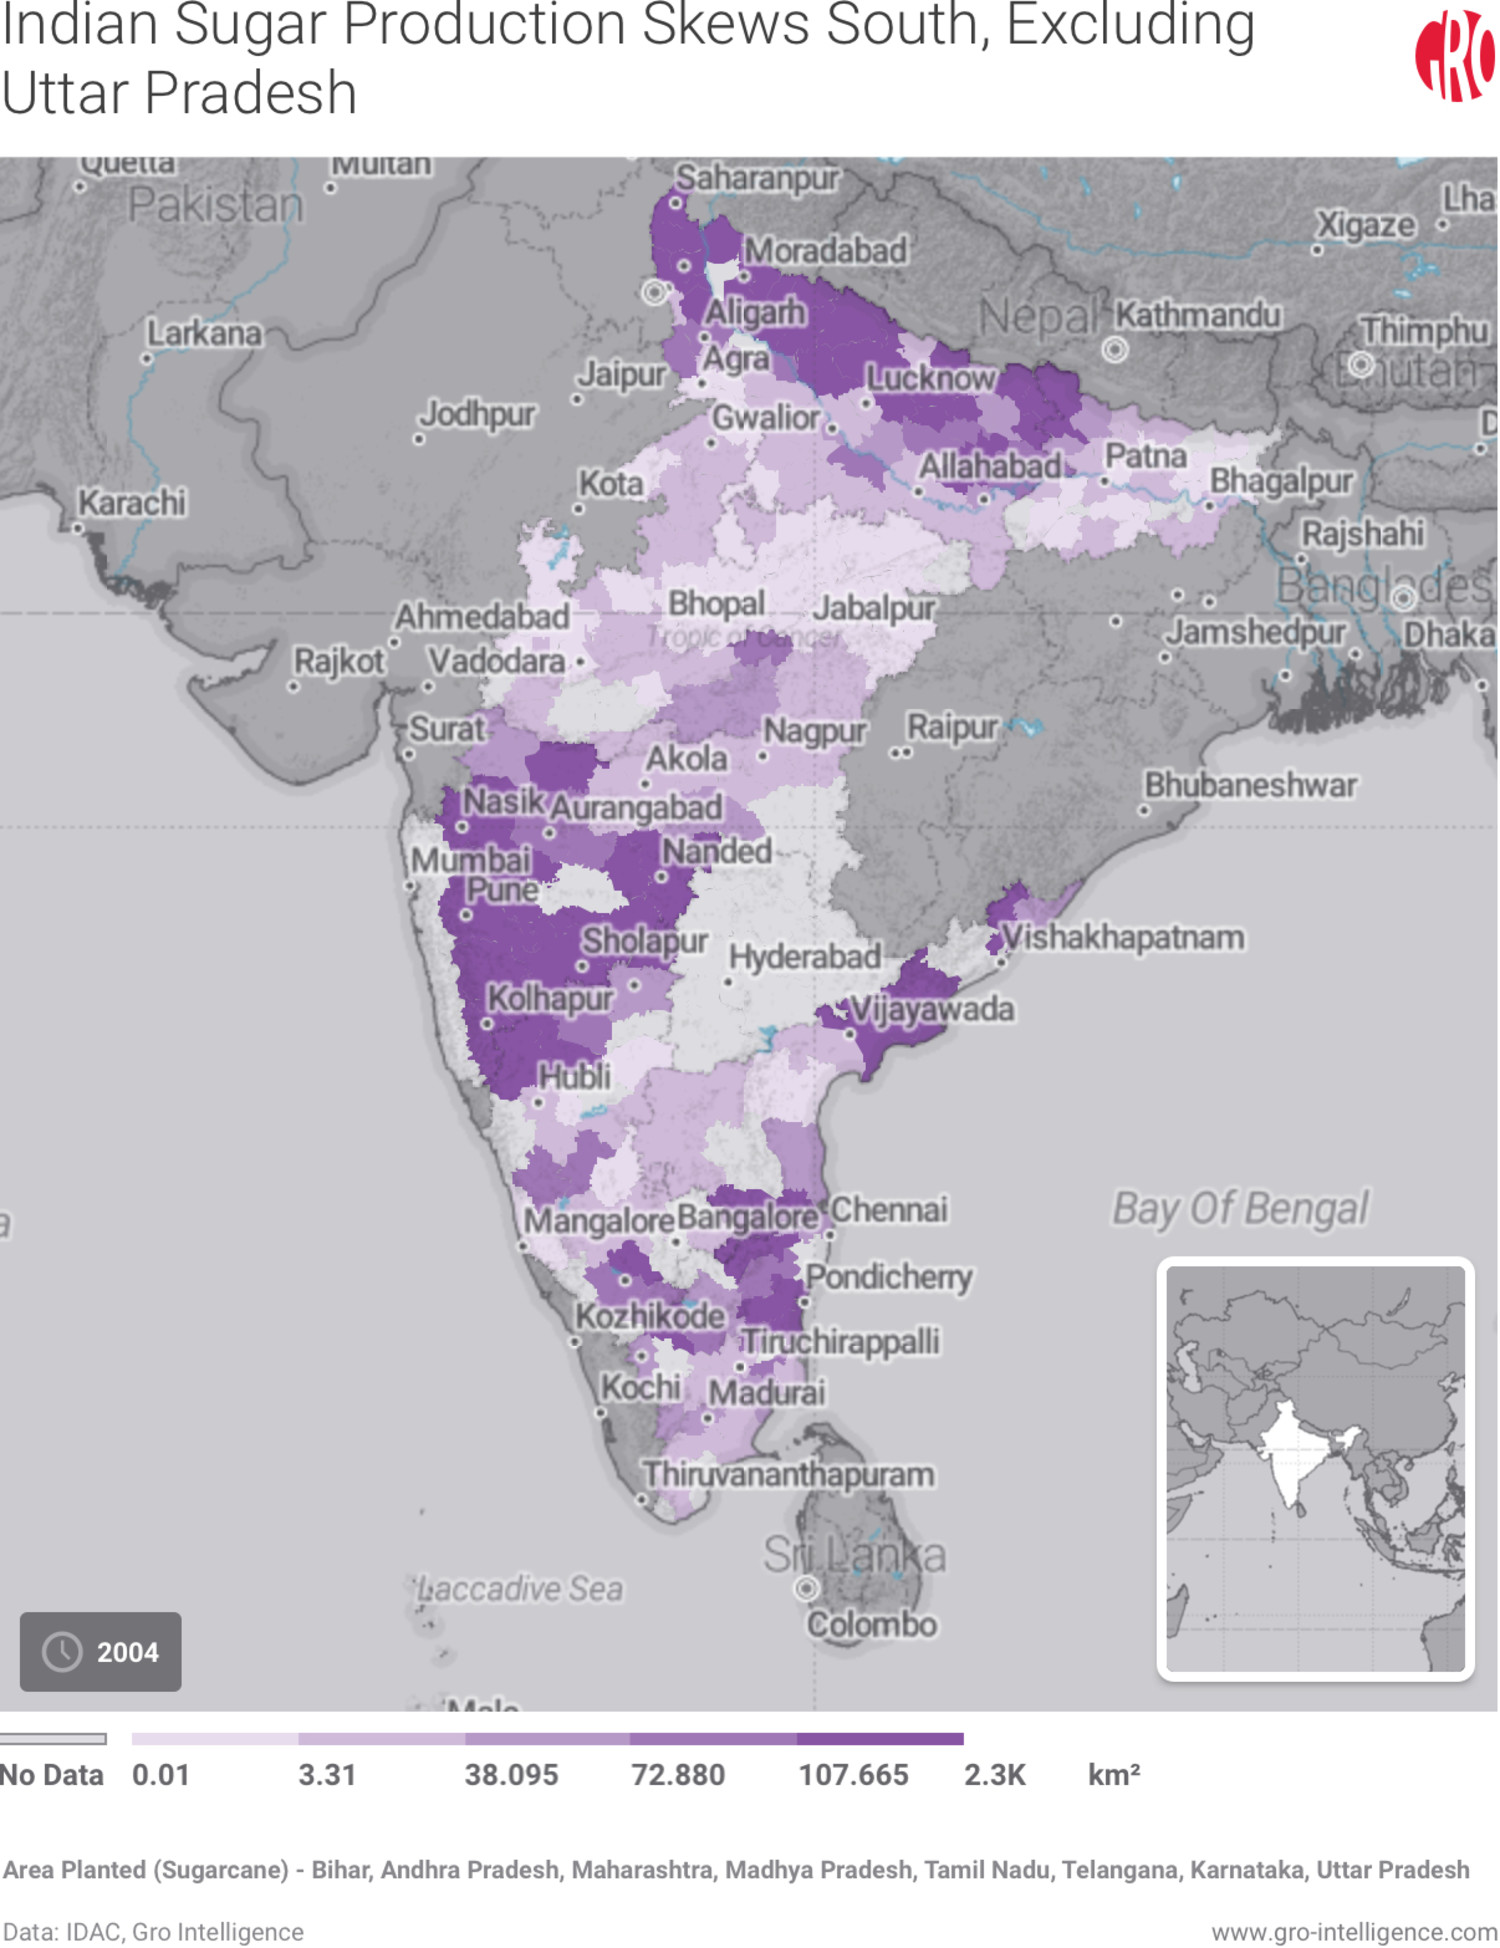 Indian Sugar Production Skews South, Excluding Uttar Pradesh